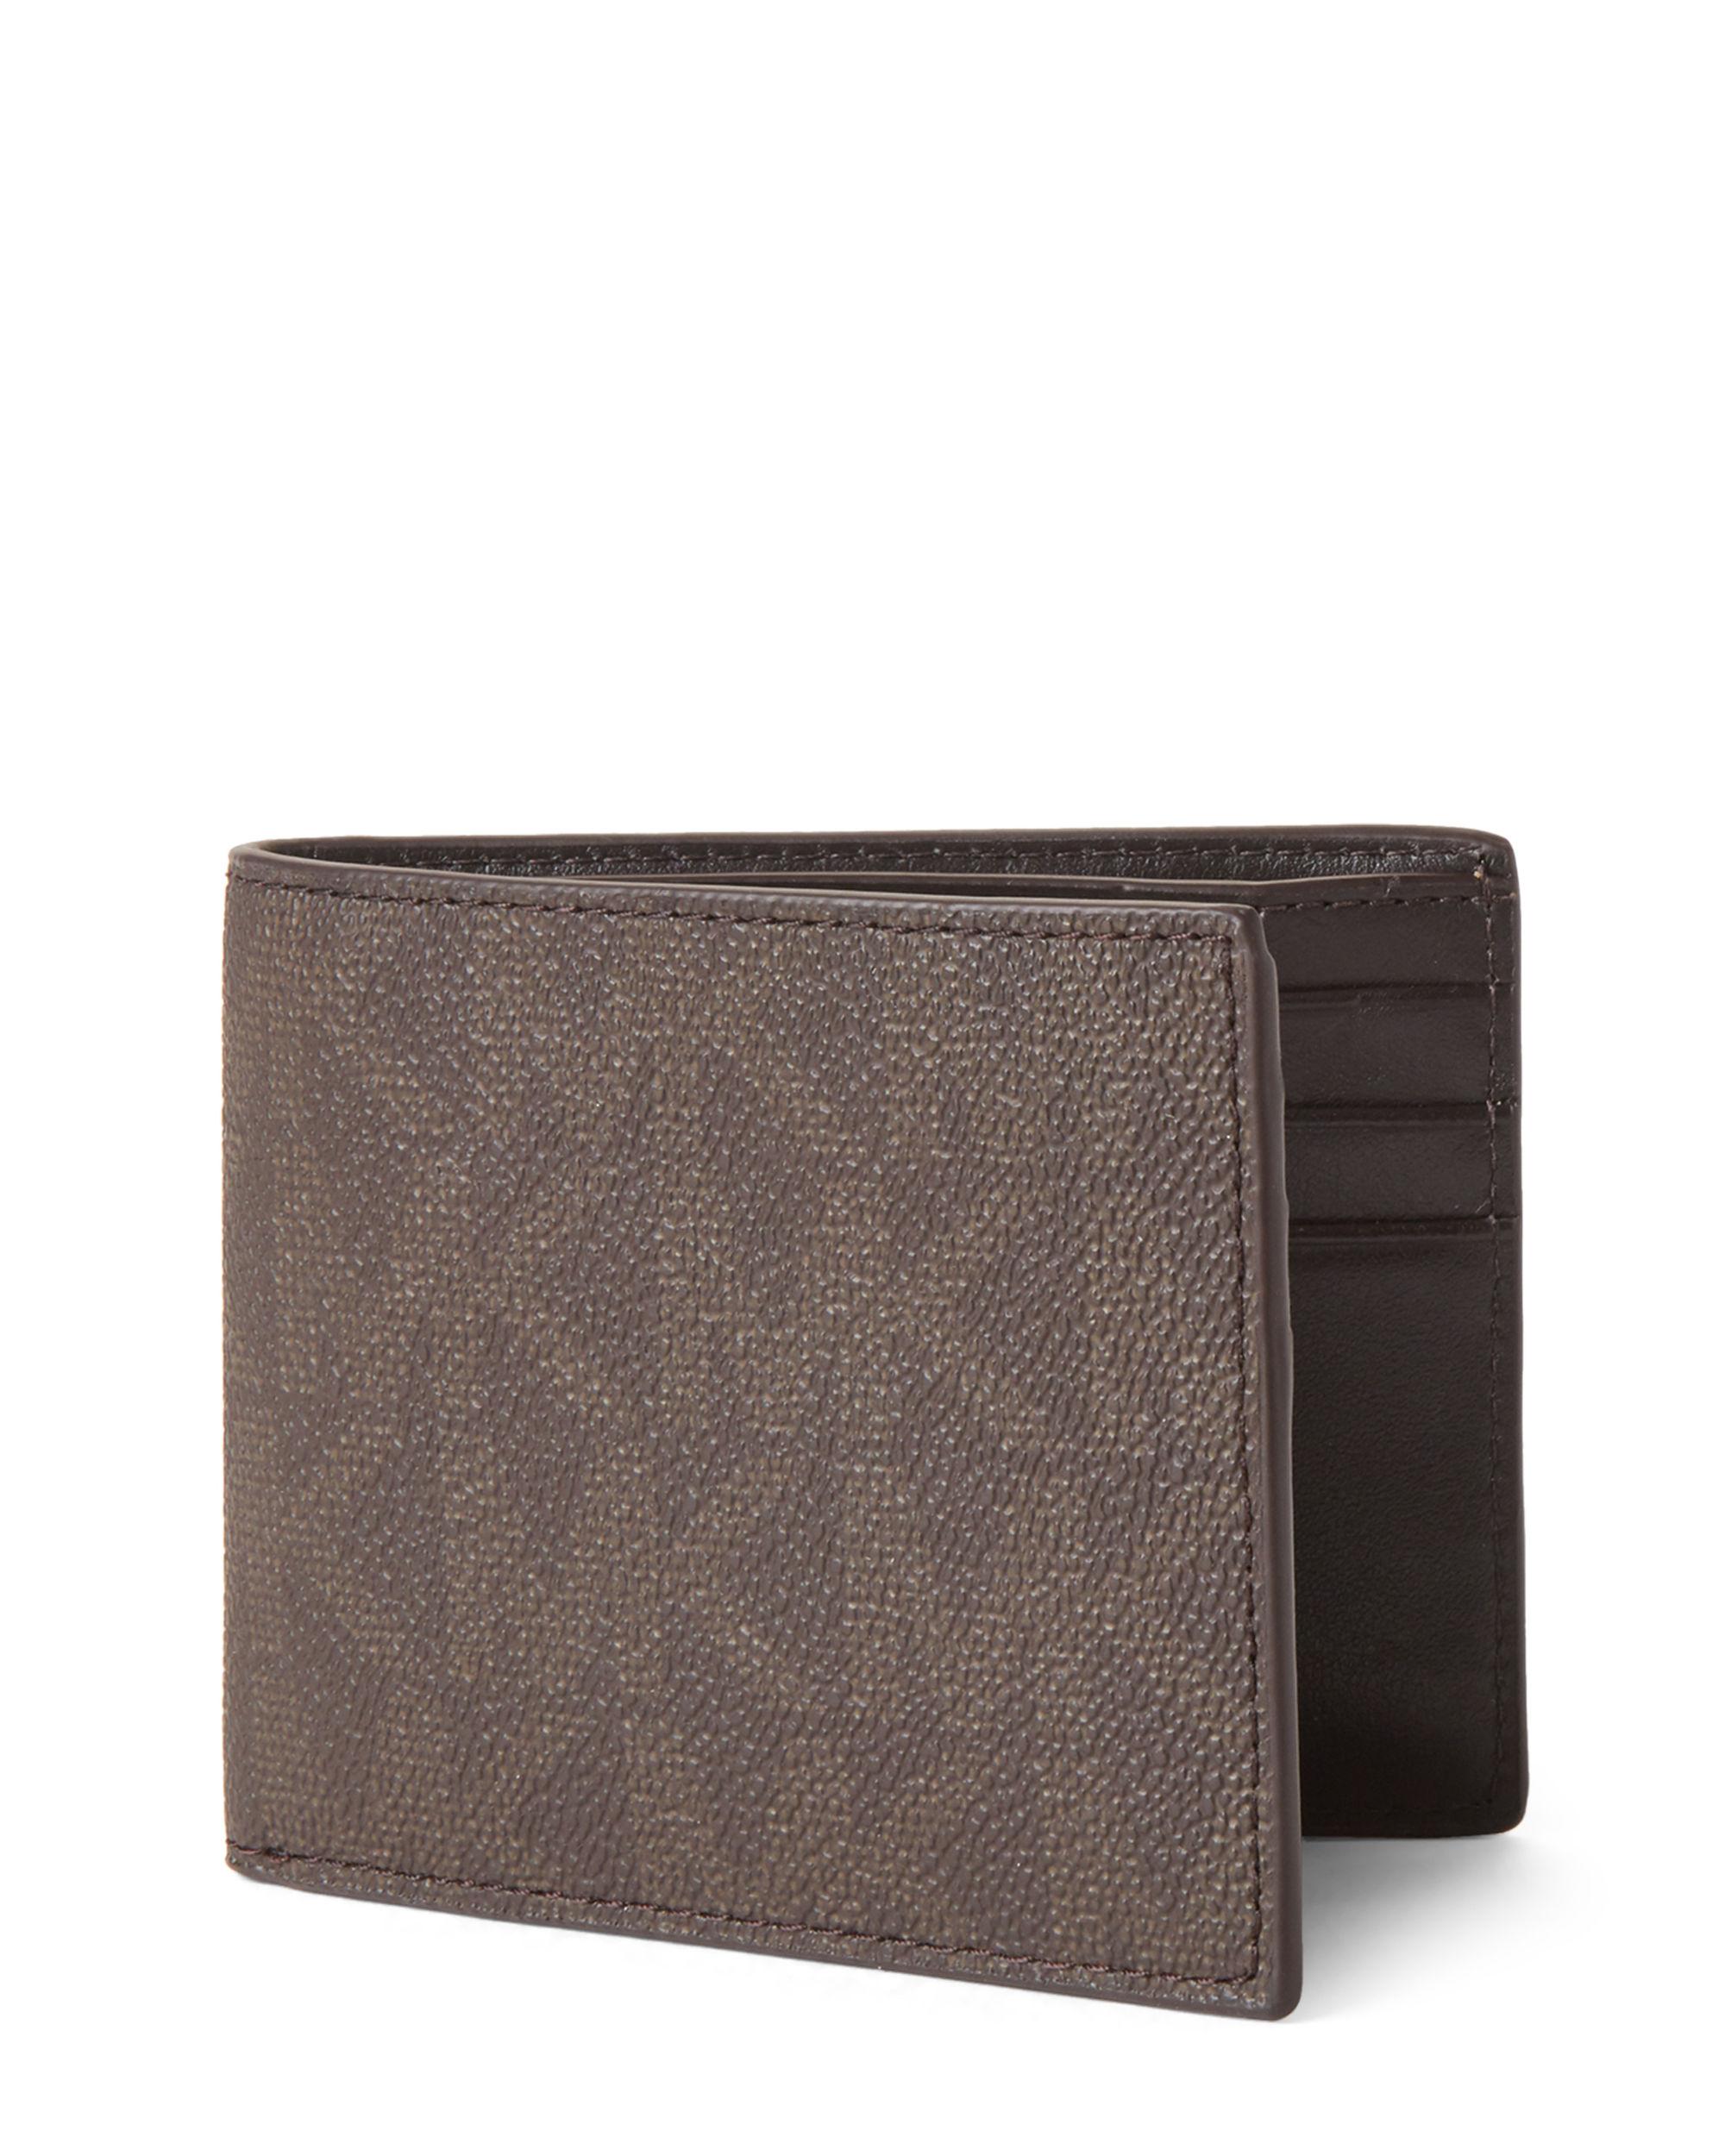 Michael Kors Shadow Signature Slim Bi-fold Wallet in Brown for Men - Lyst